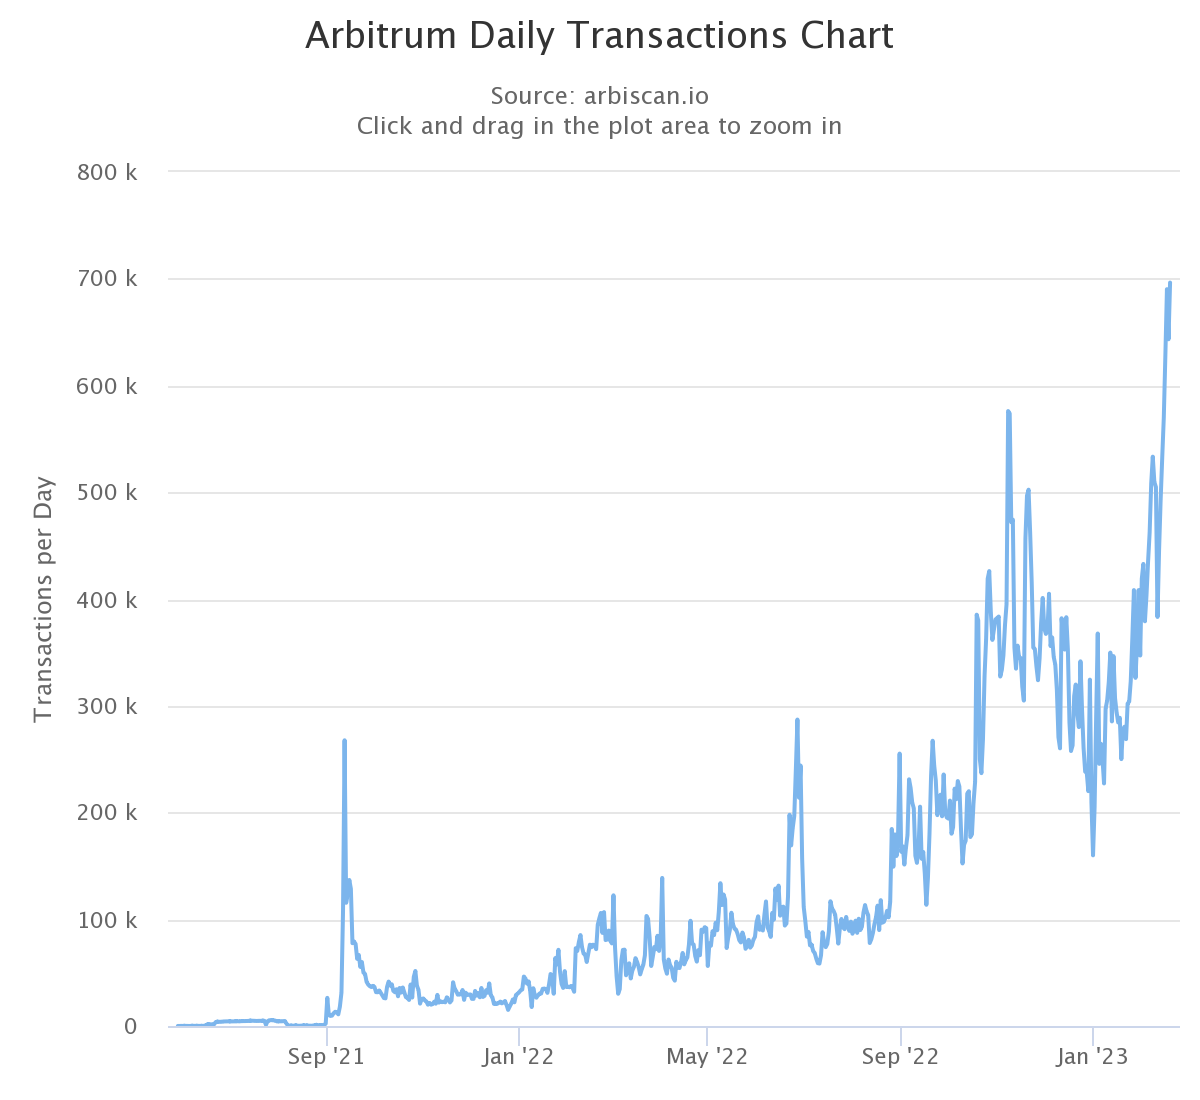 Arbitrum transaction volume is rising as DeFi actions increase - 1